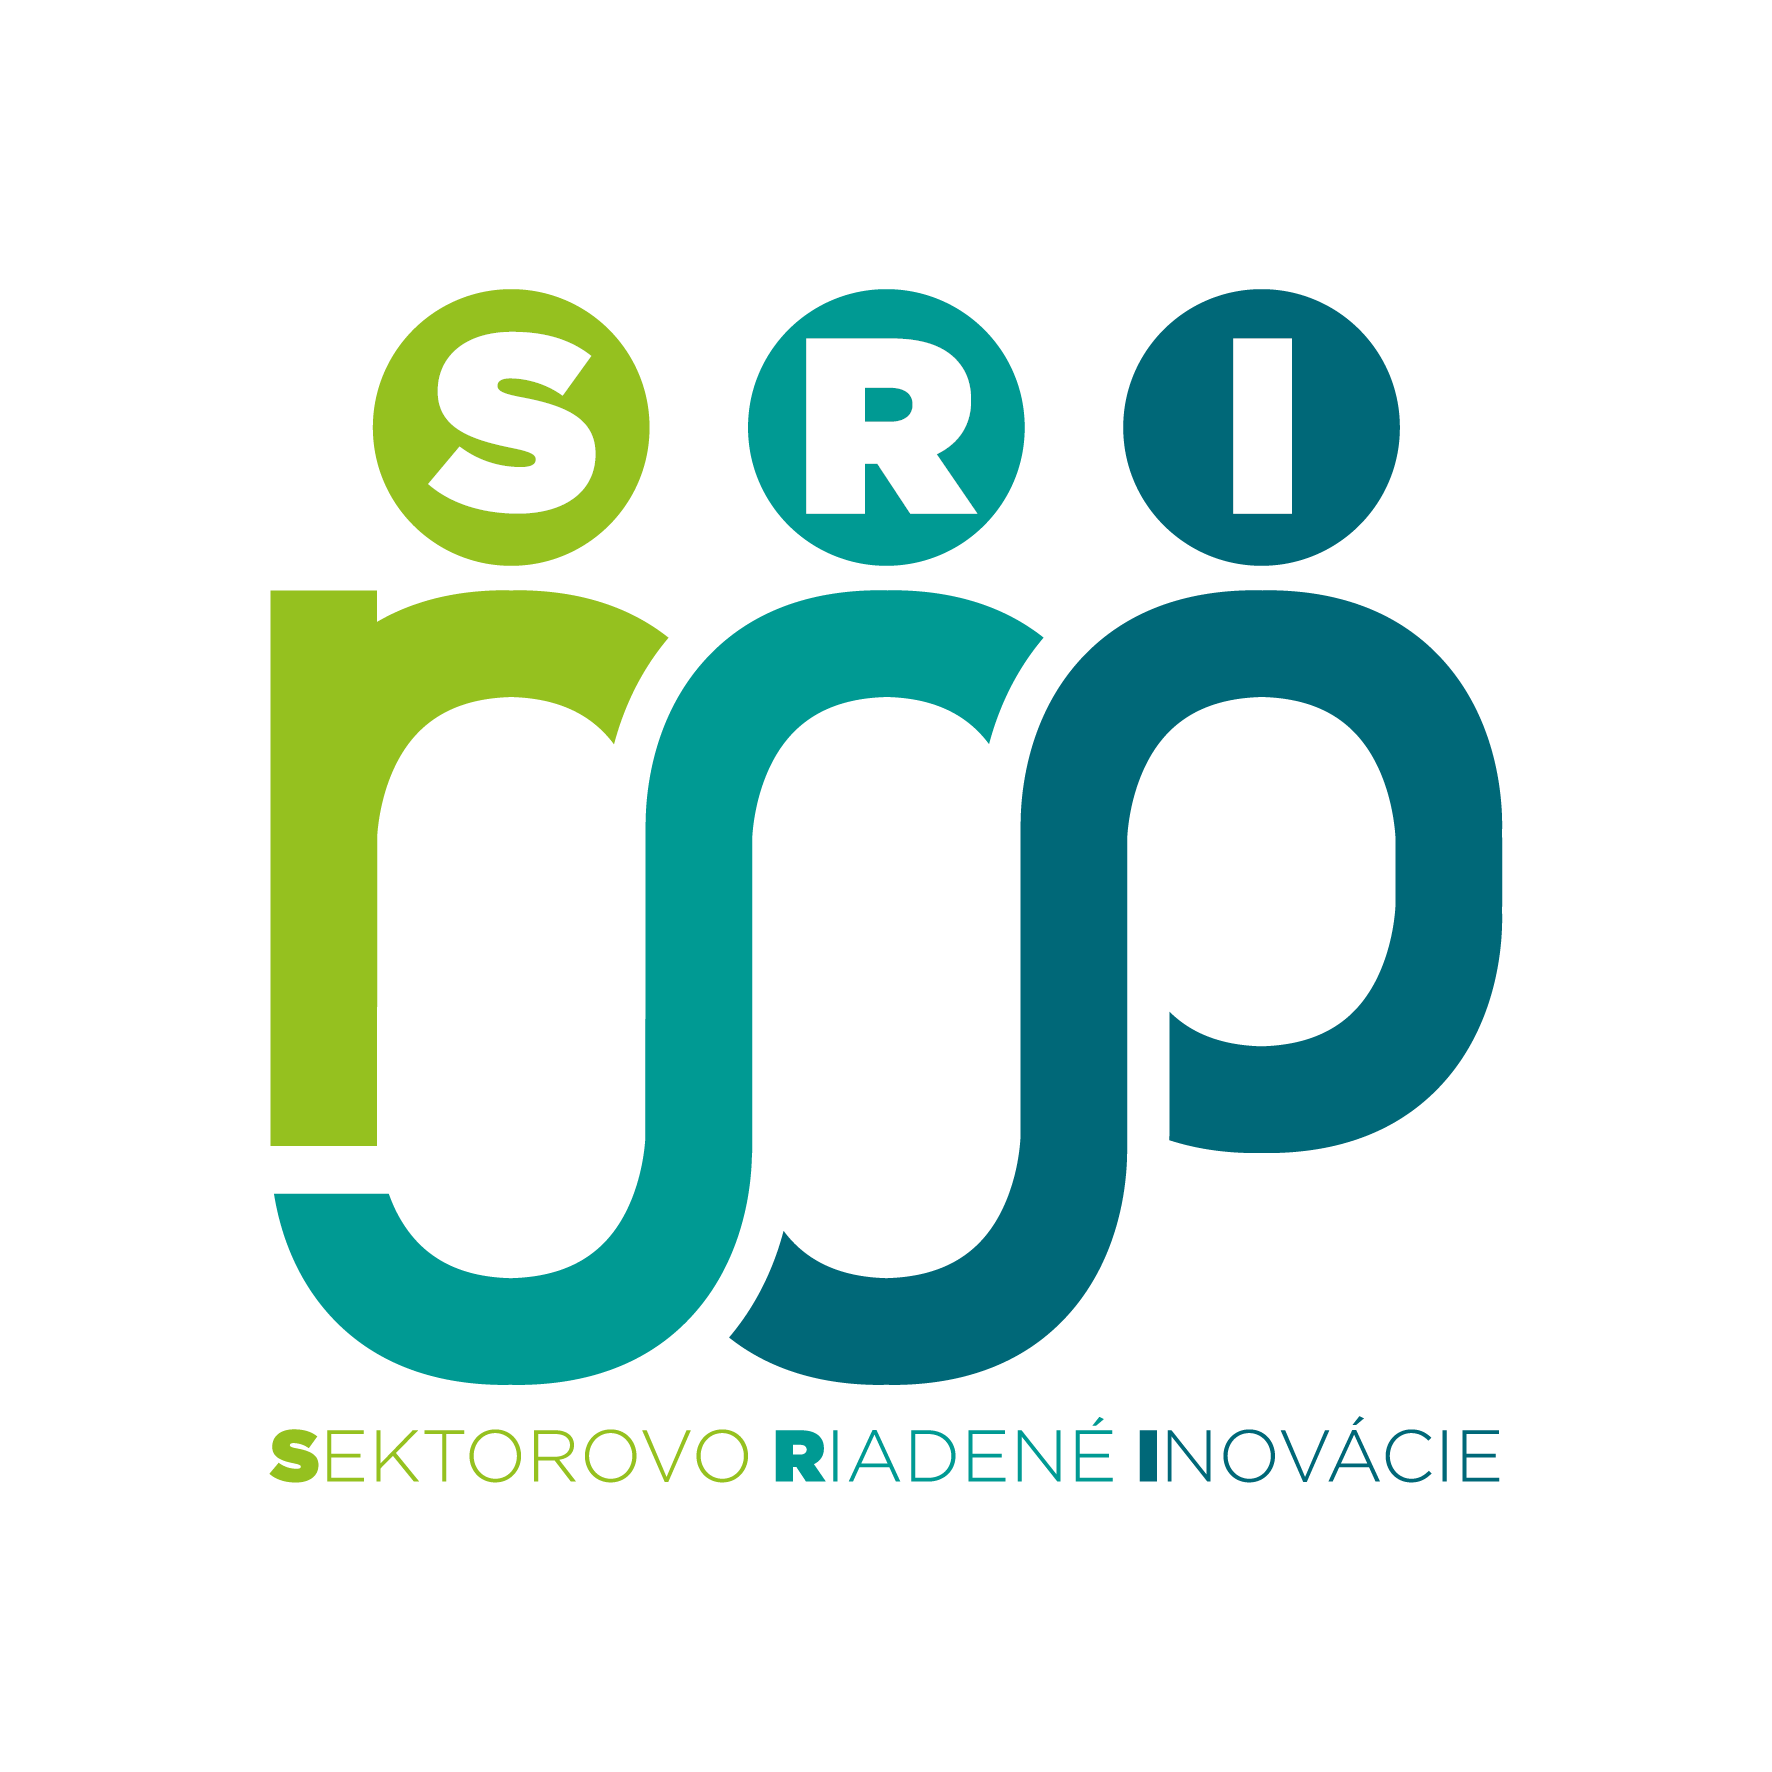 Logo SRI